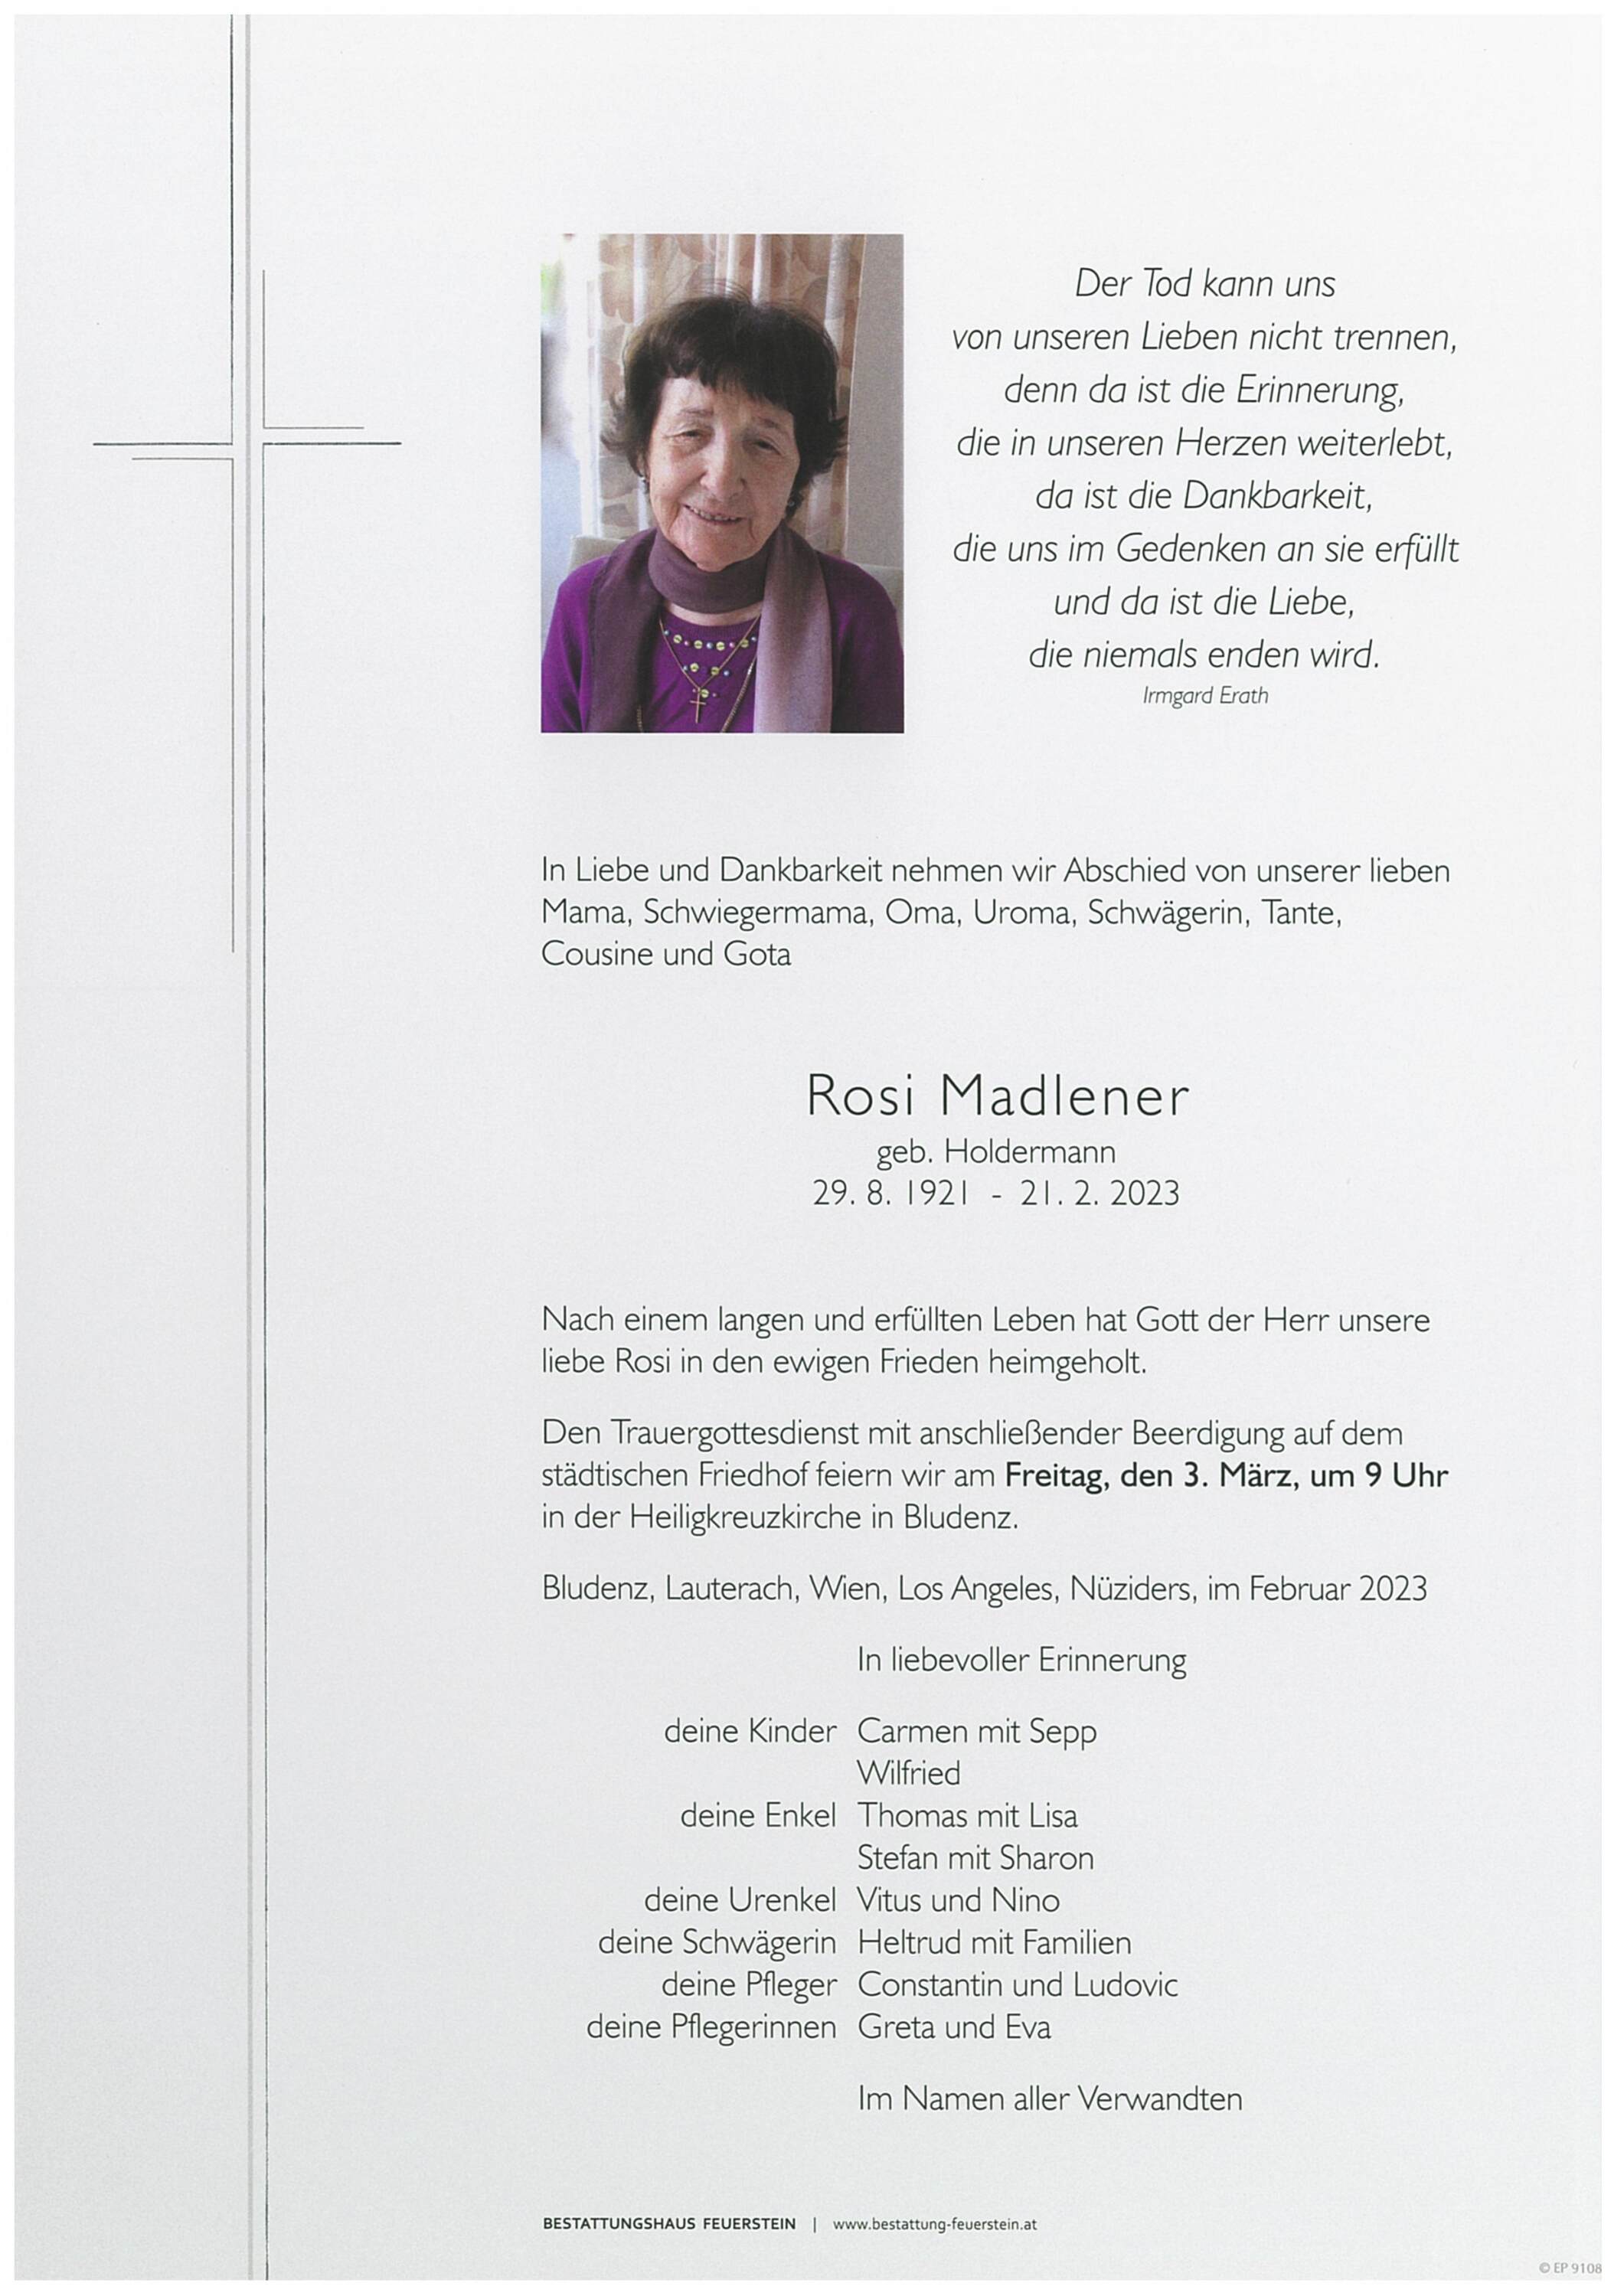 Rosi Madlener